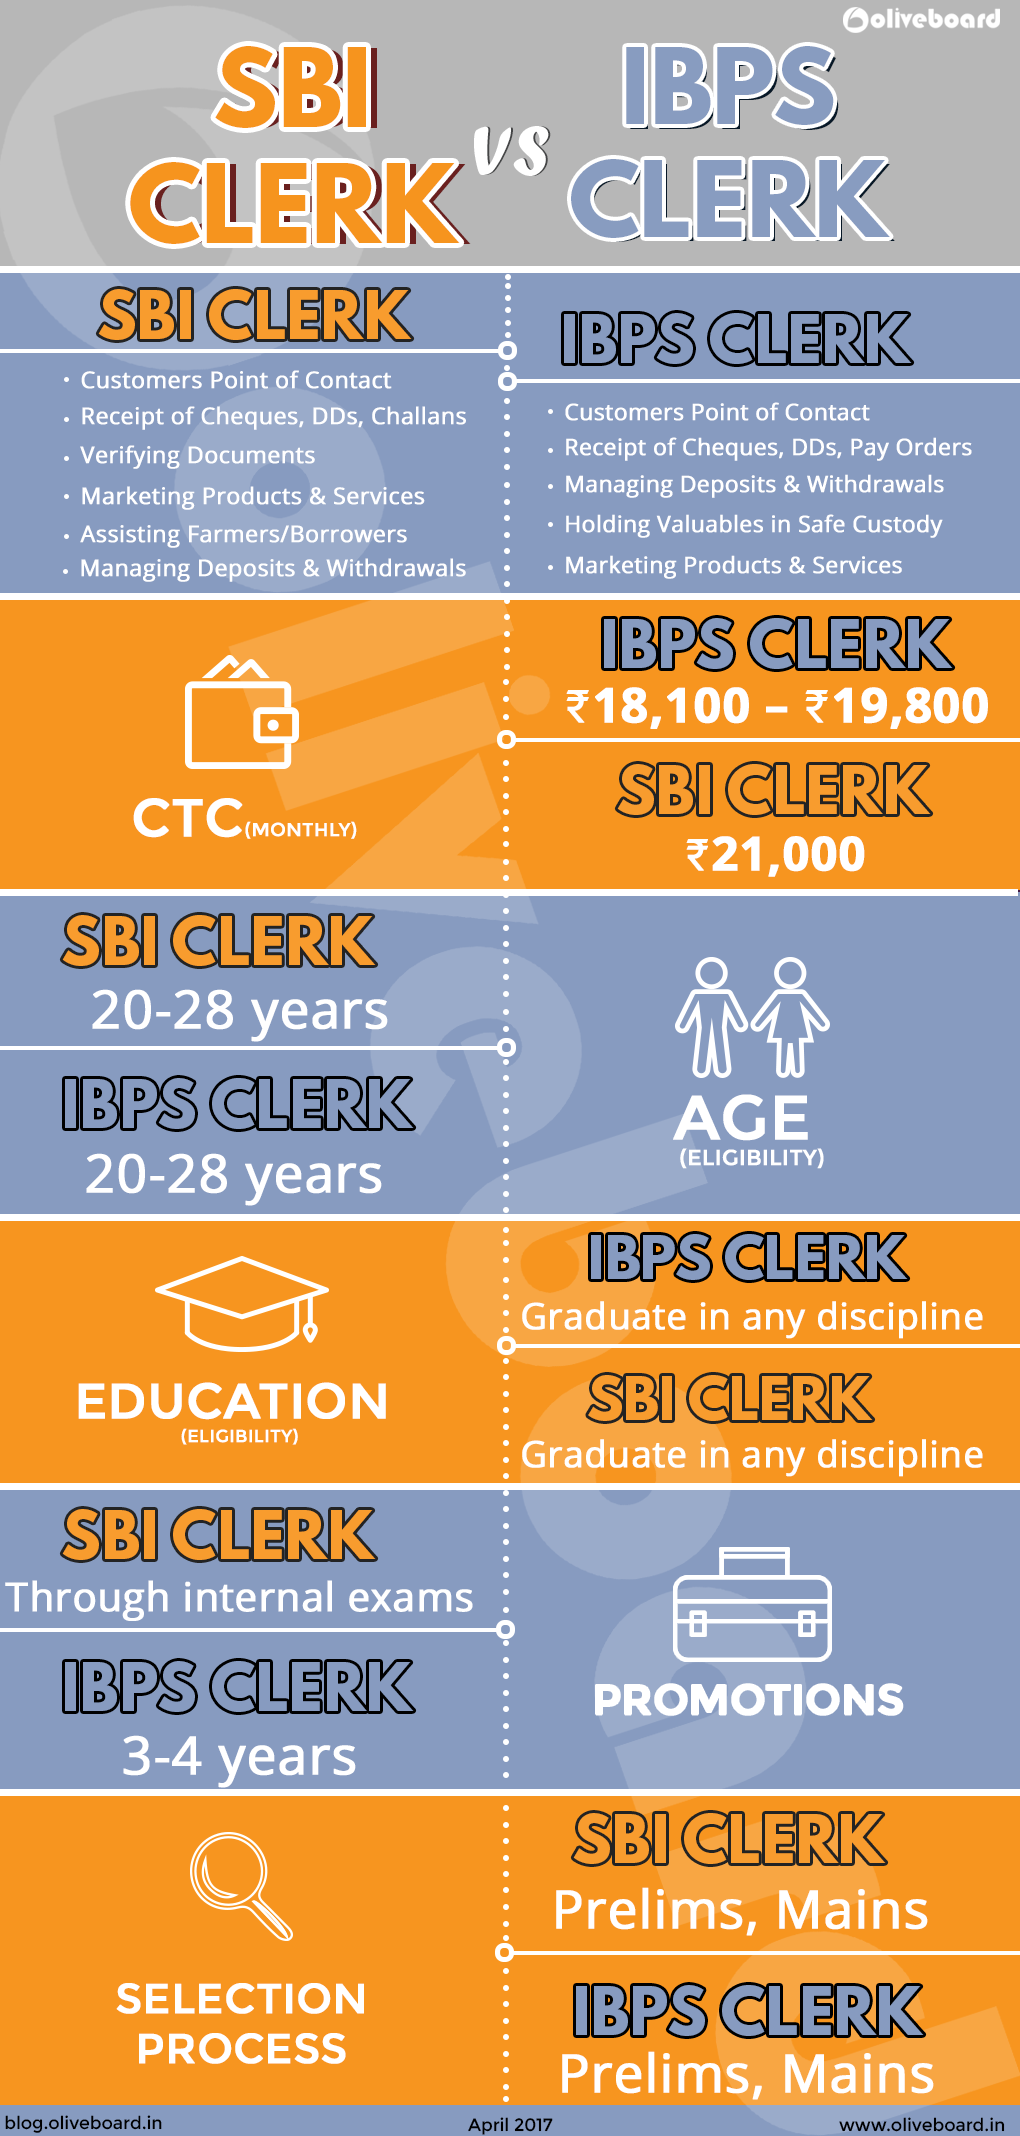 SBI Clerk vs IBPS Clerk: The Difference